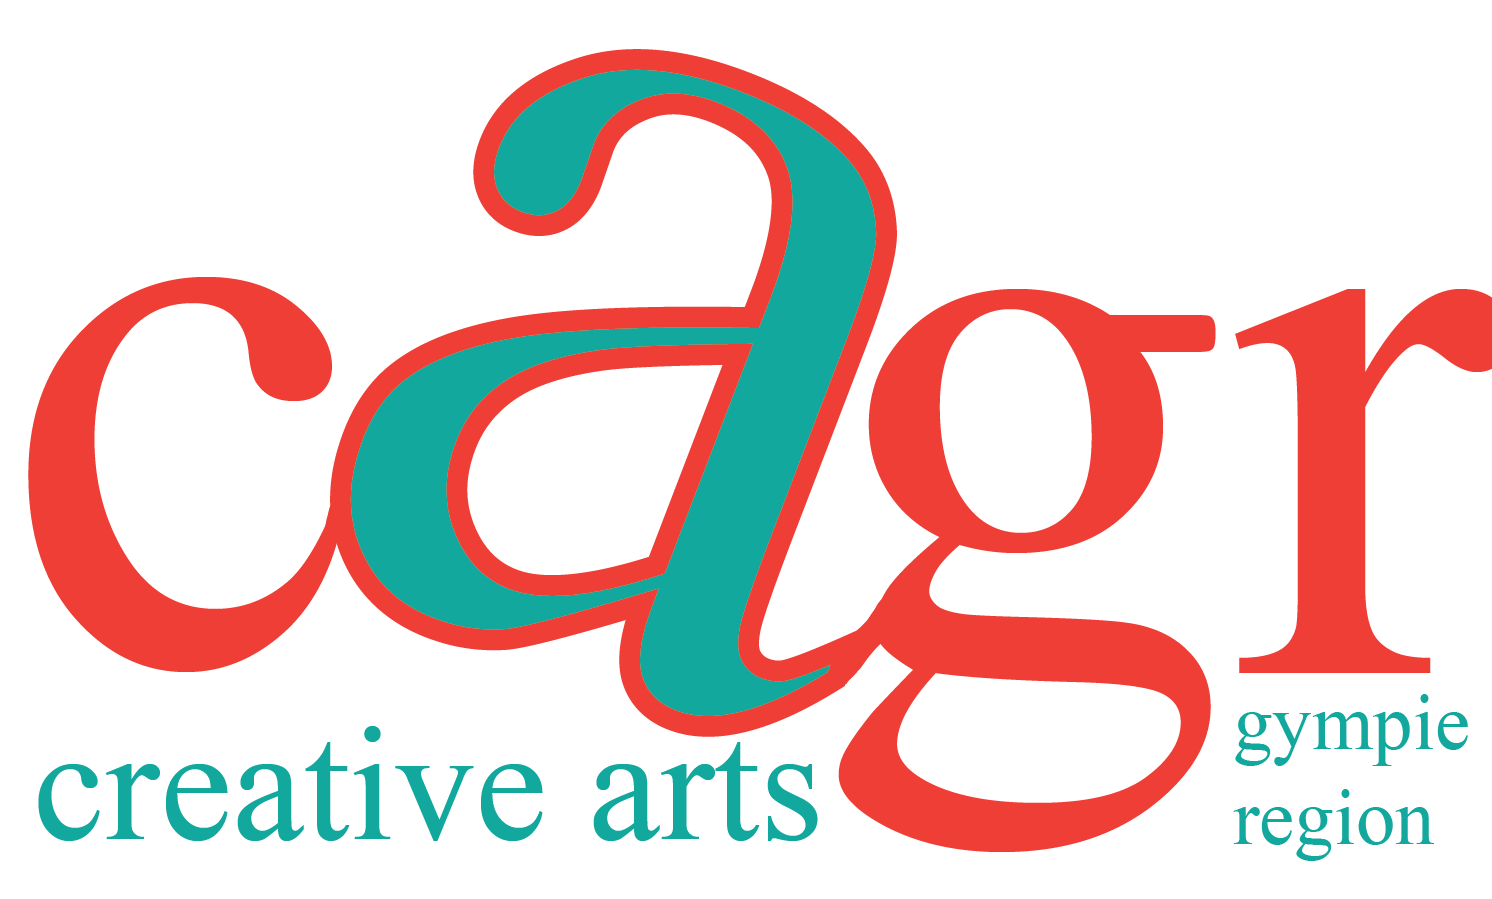 Creative Arts Gympie Region